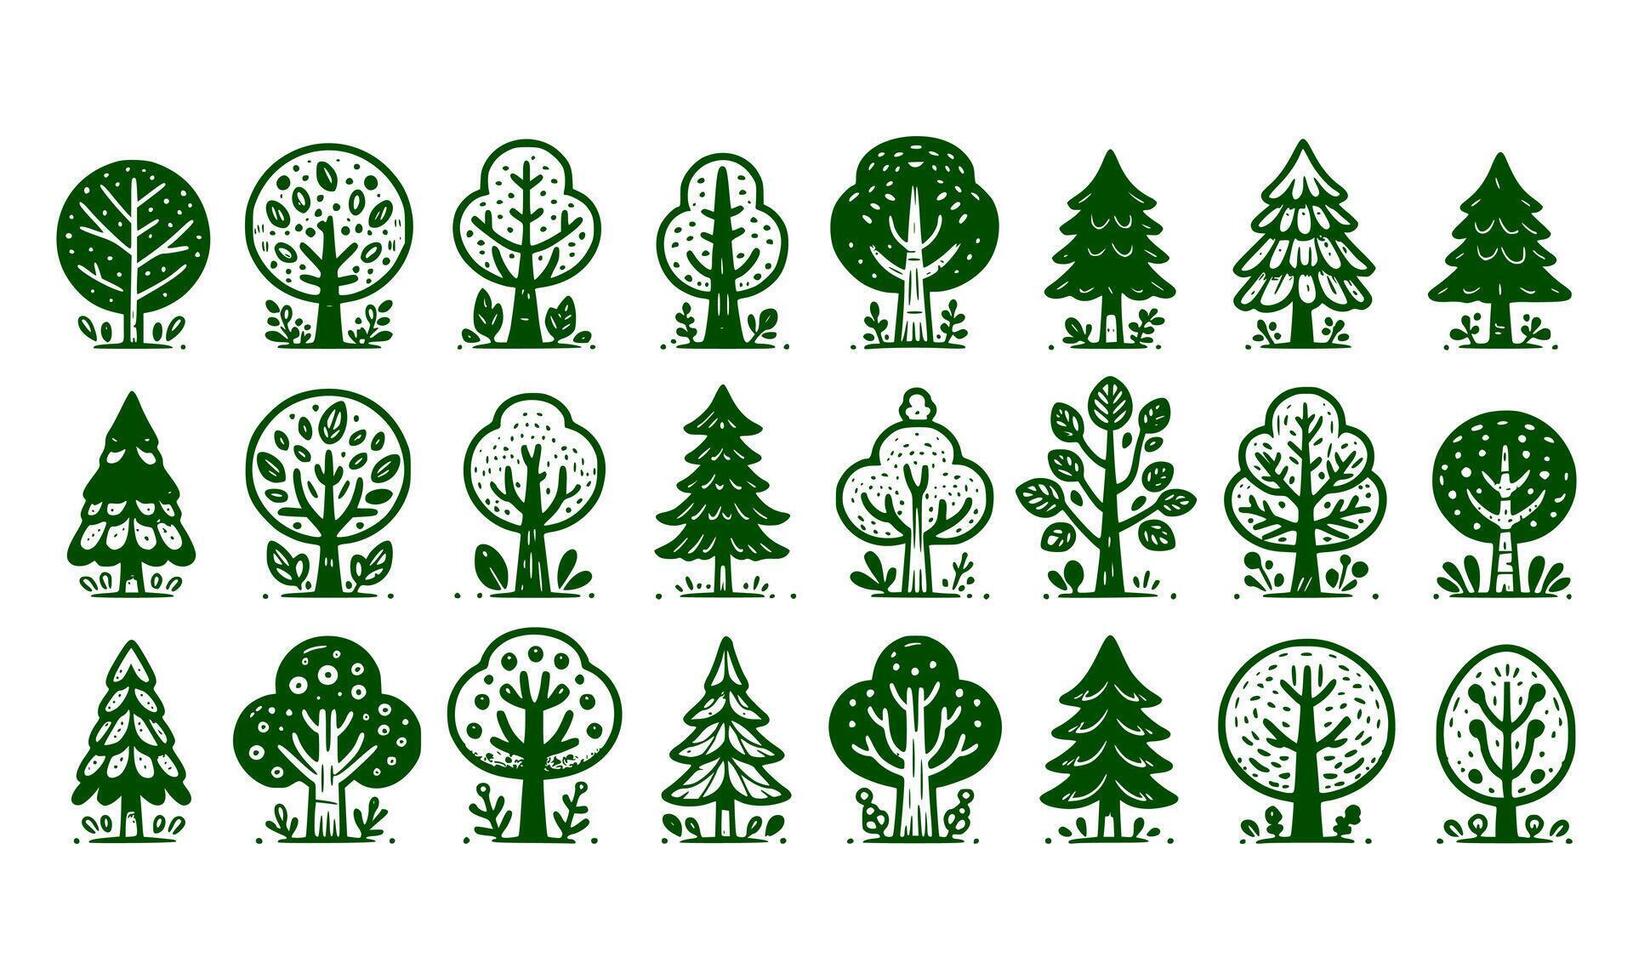 Diversity of trees set on background white vector